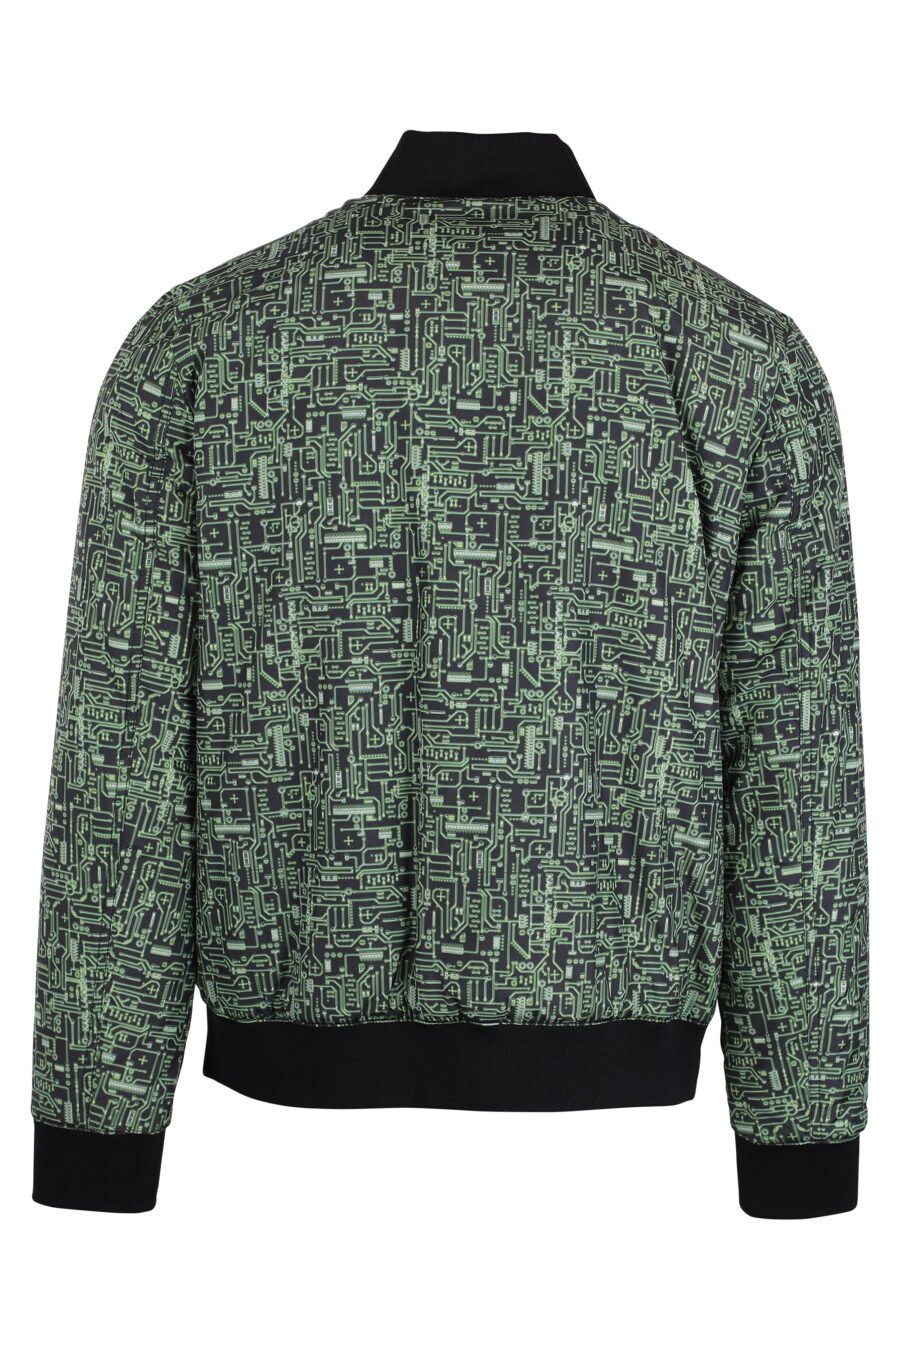 Reversible green and black printed bomber jacket - IMG 4296